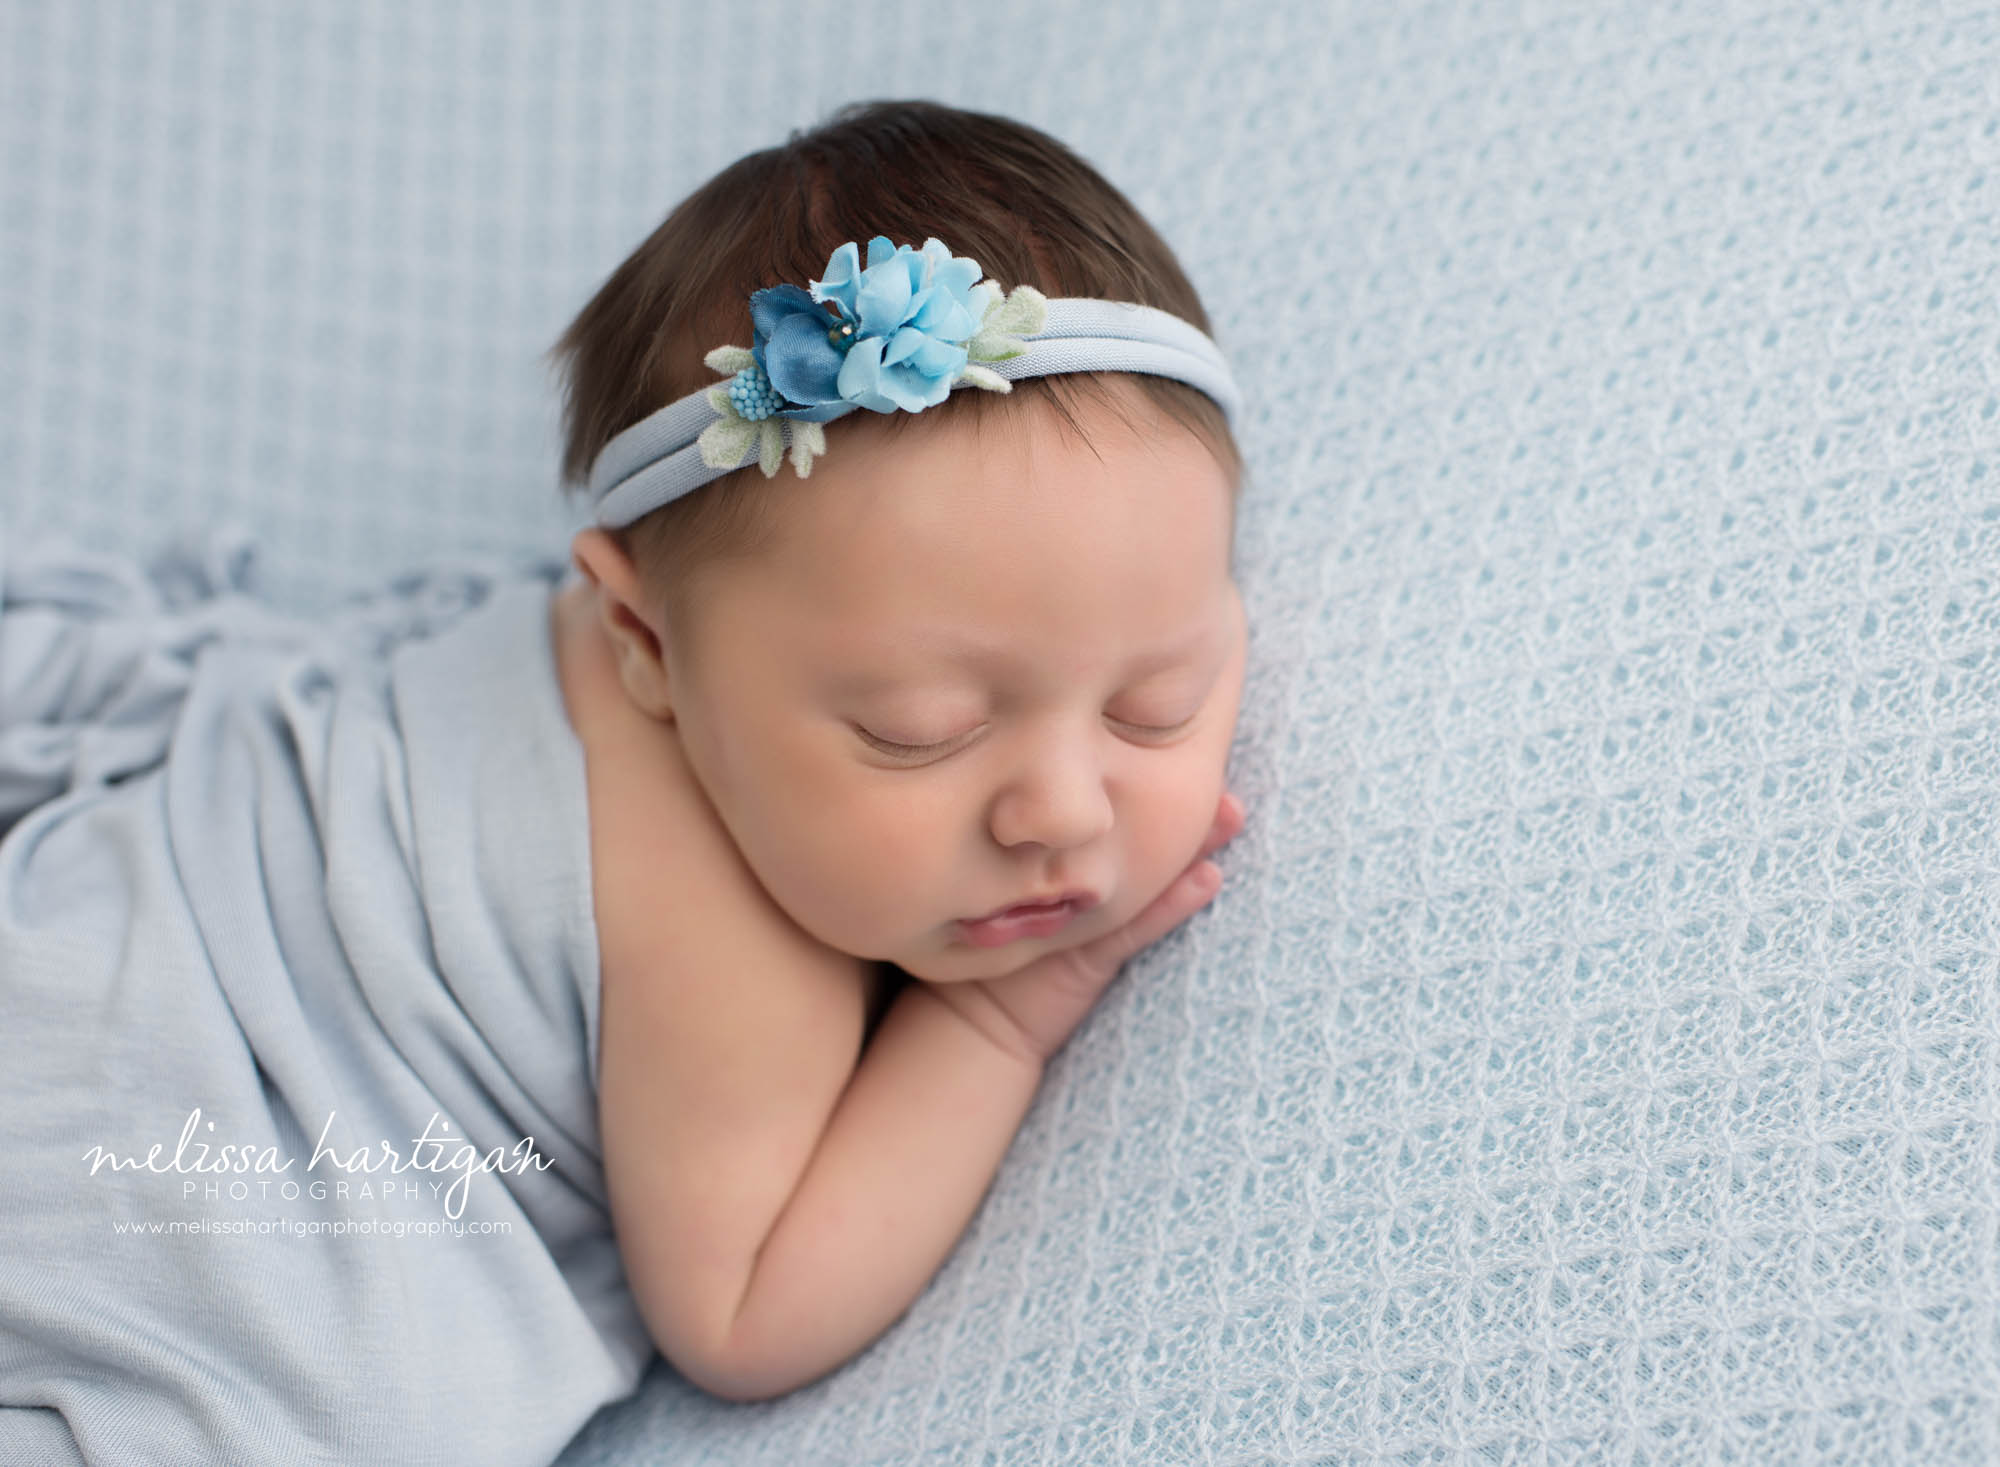 Leila CT Newborn Session baby girl sleeping on blue blanket